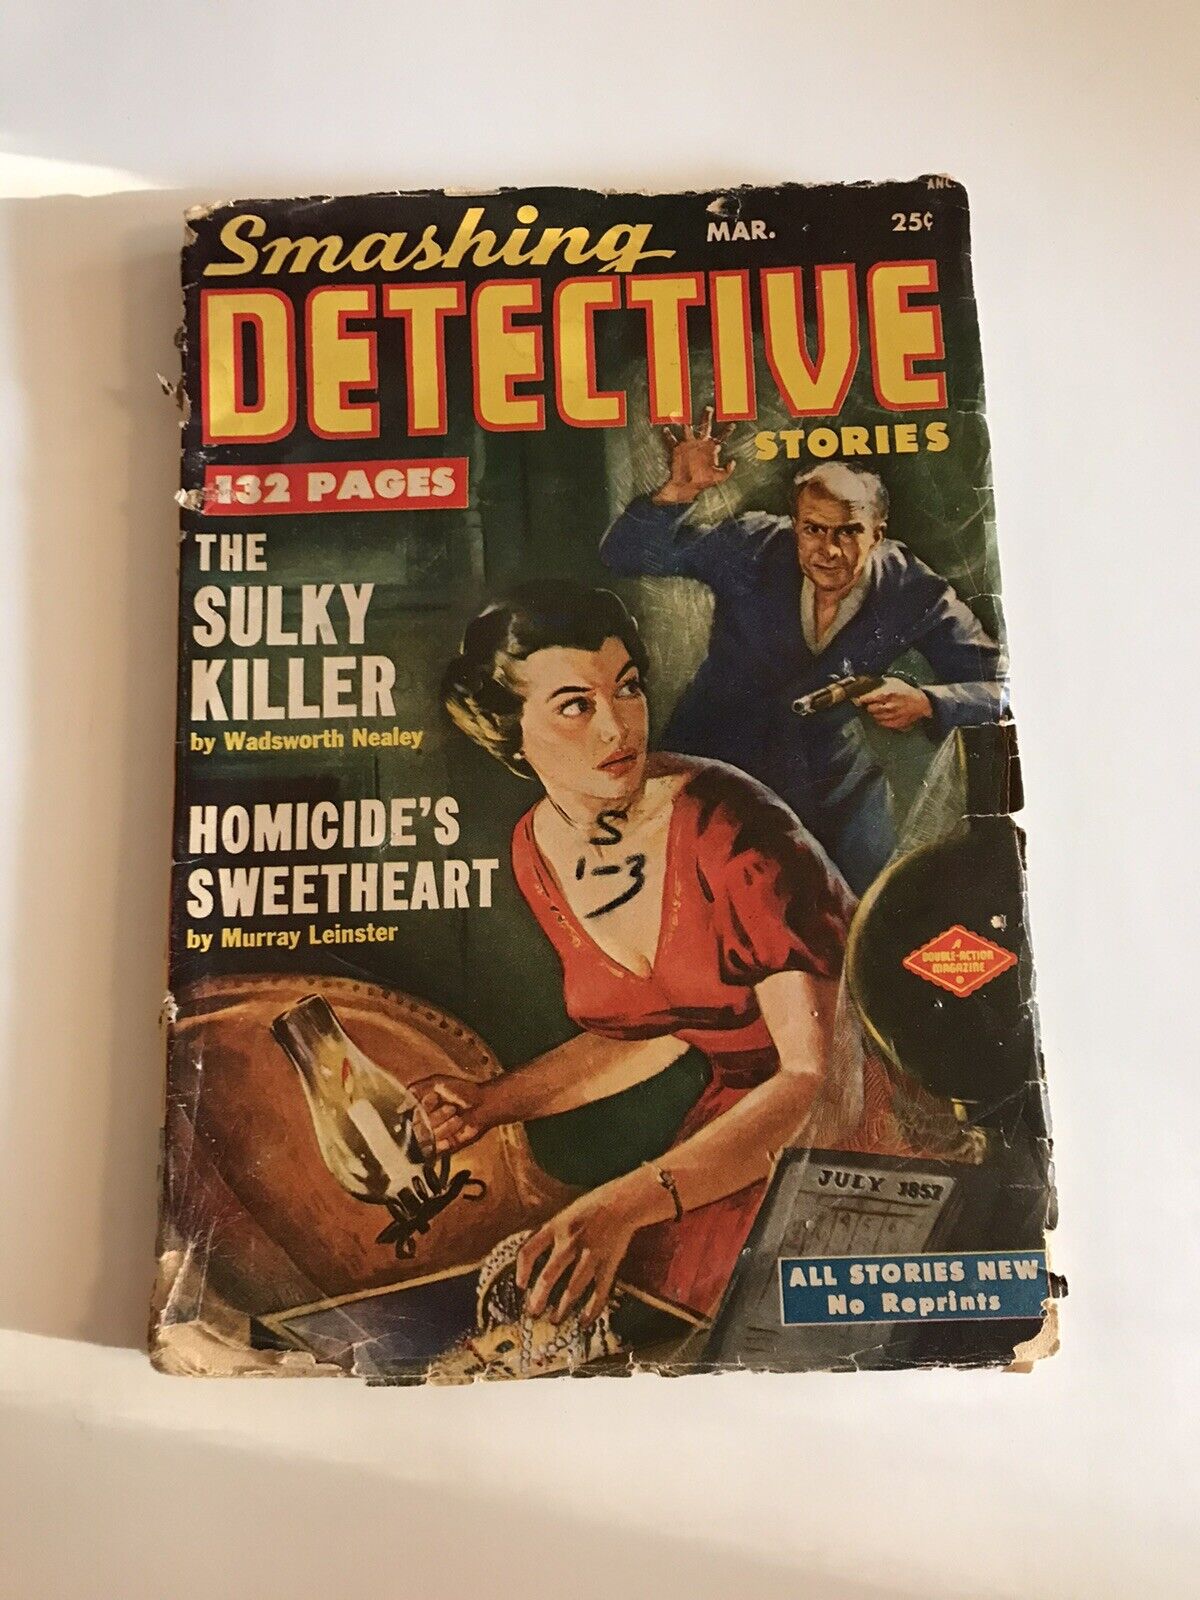 Smashing Detective Stories Pulp Fiction March 1952 #Vol. 1 #5